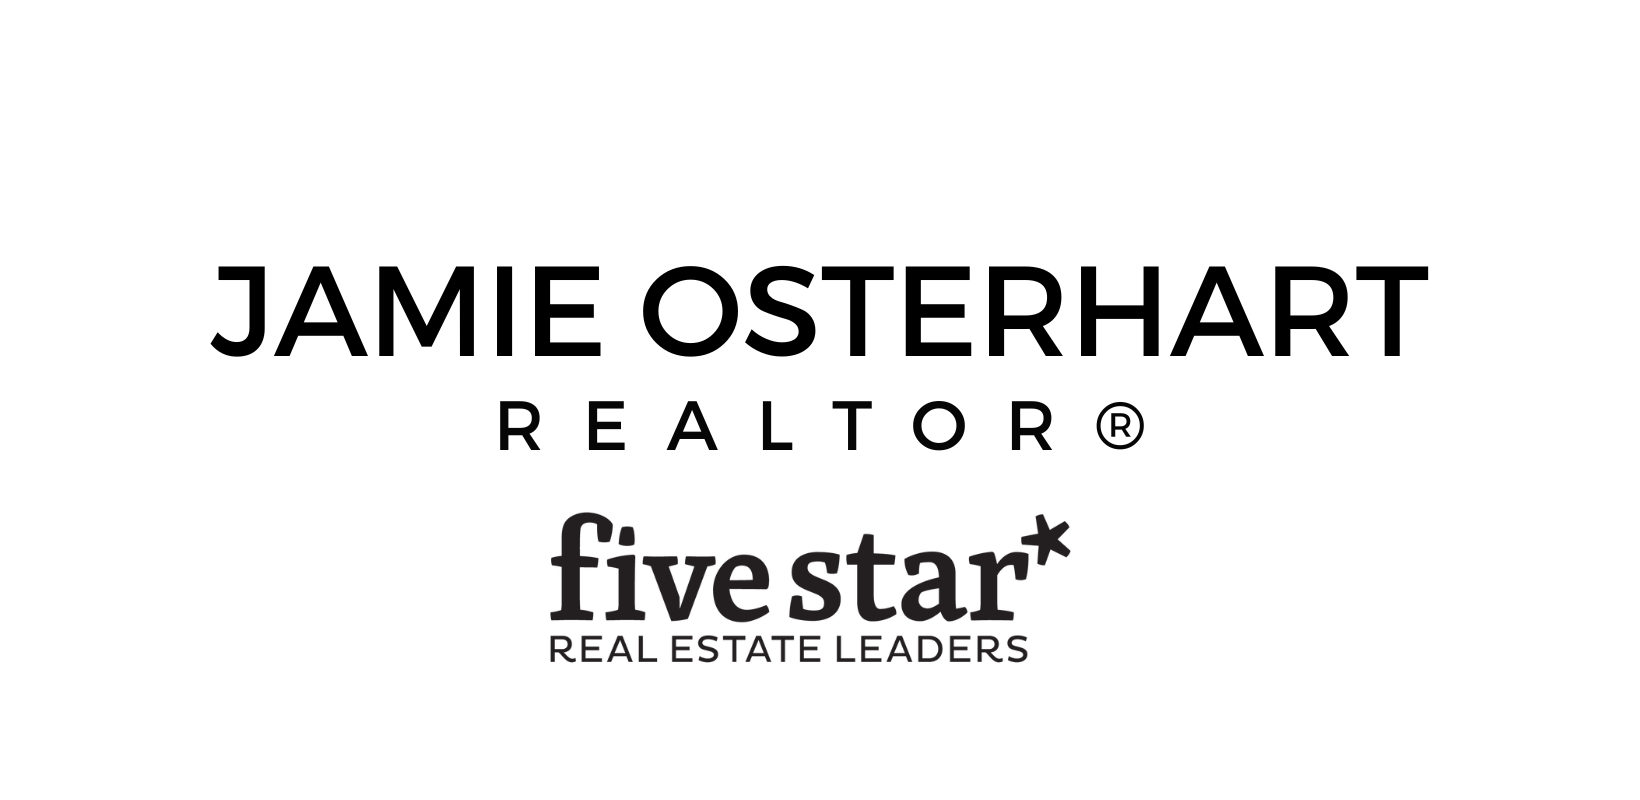 Jamie Osterhart, REALTOR® - Five Star Real Estate